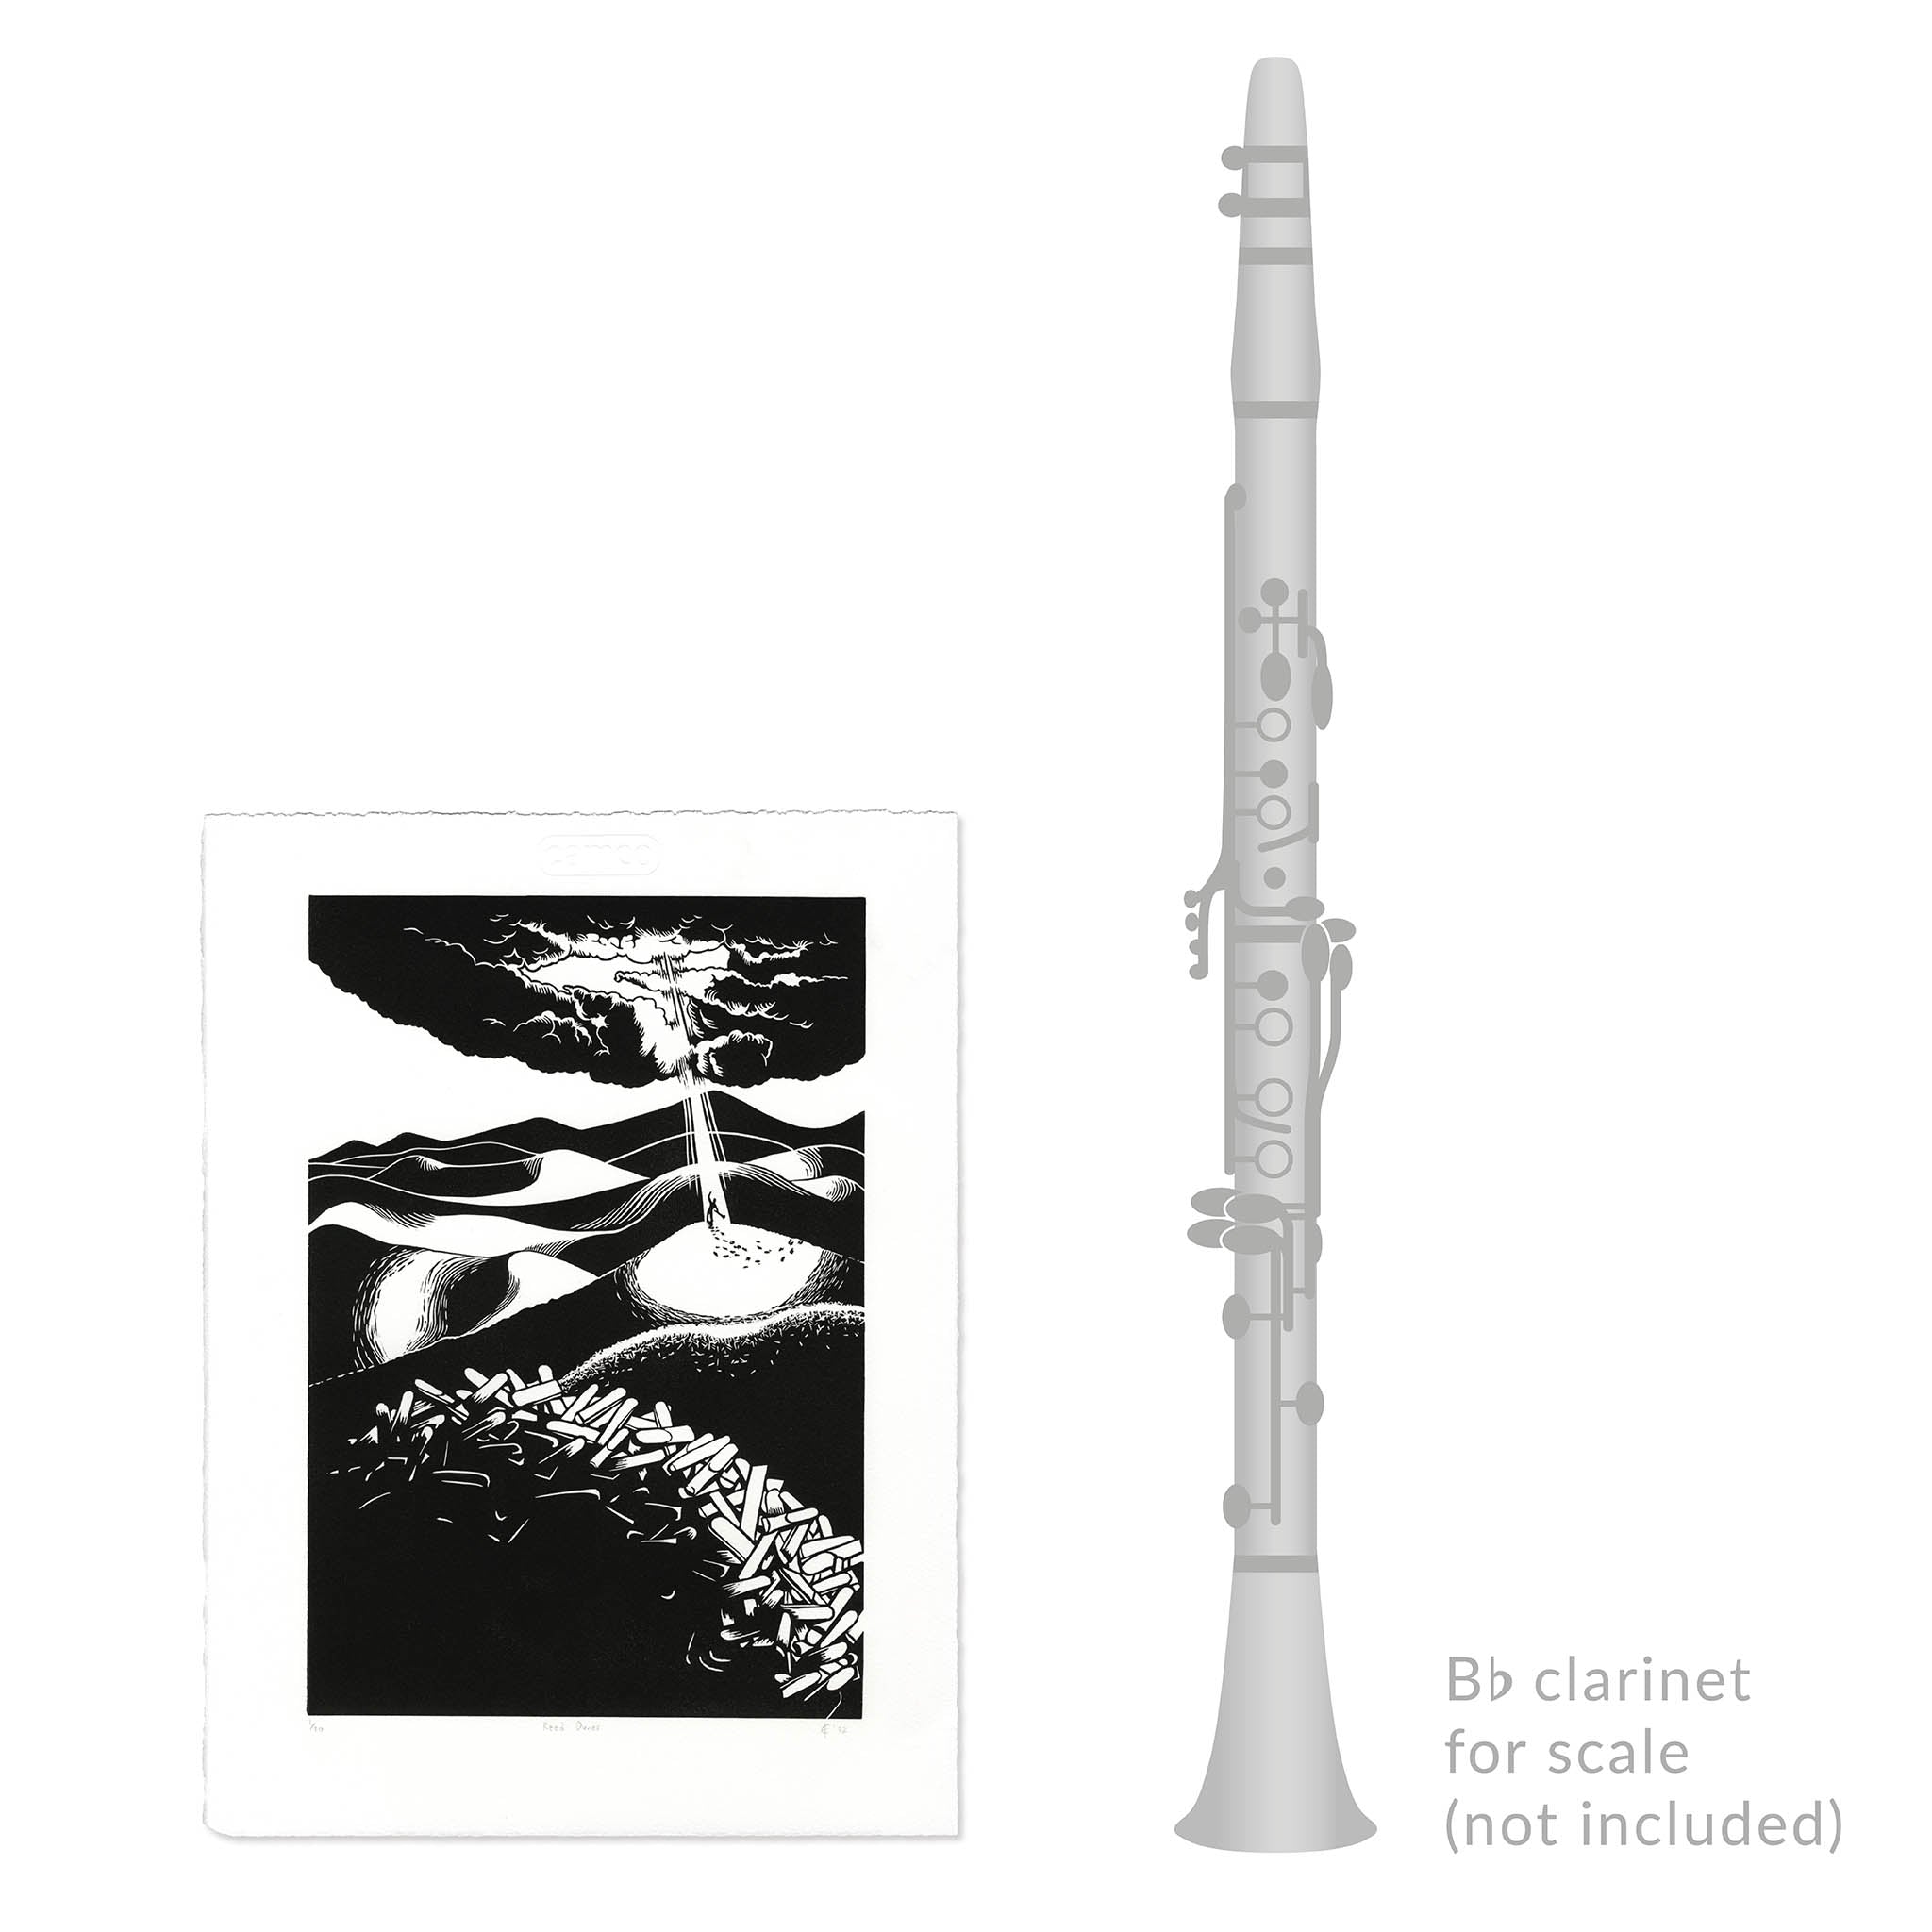 Reed Dunes Clarinet Linocut Art print size comparison